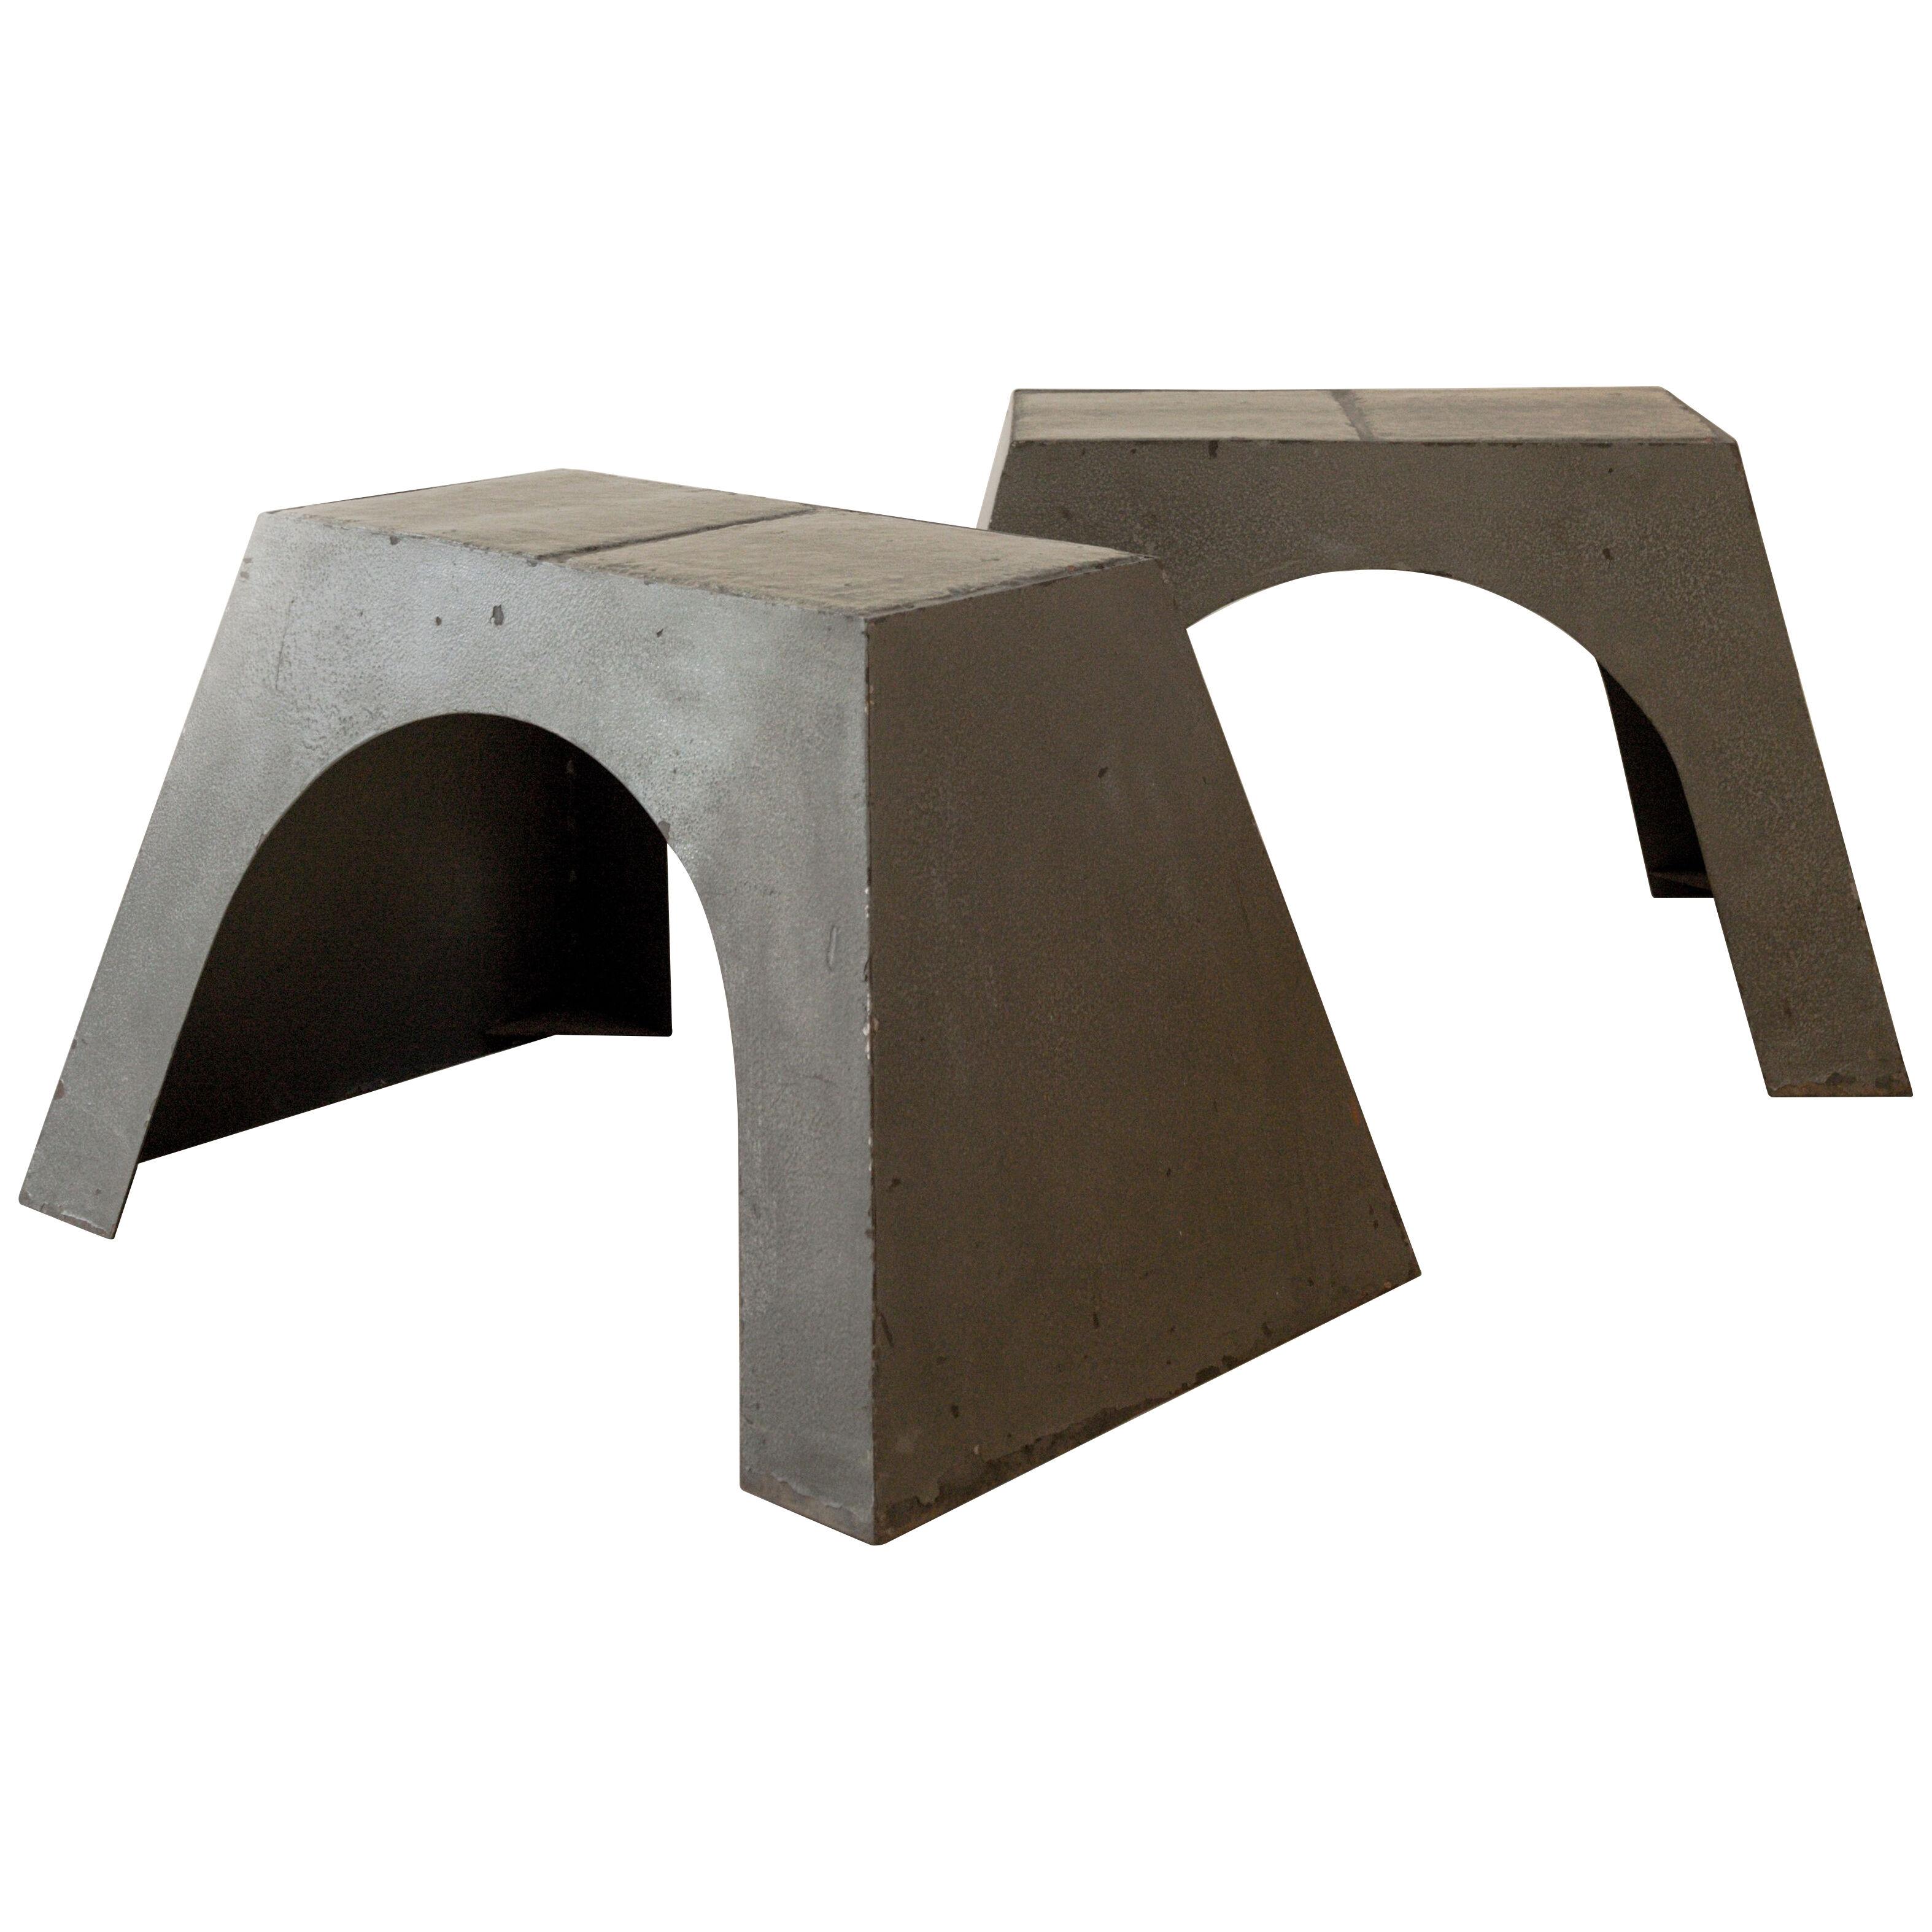 Steel + Tile Top Tables